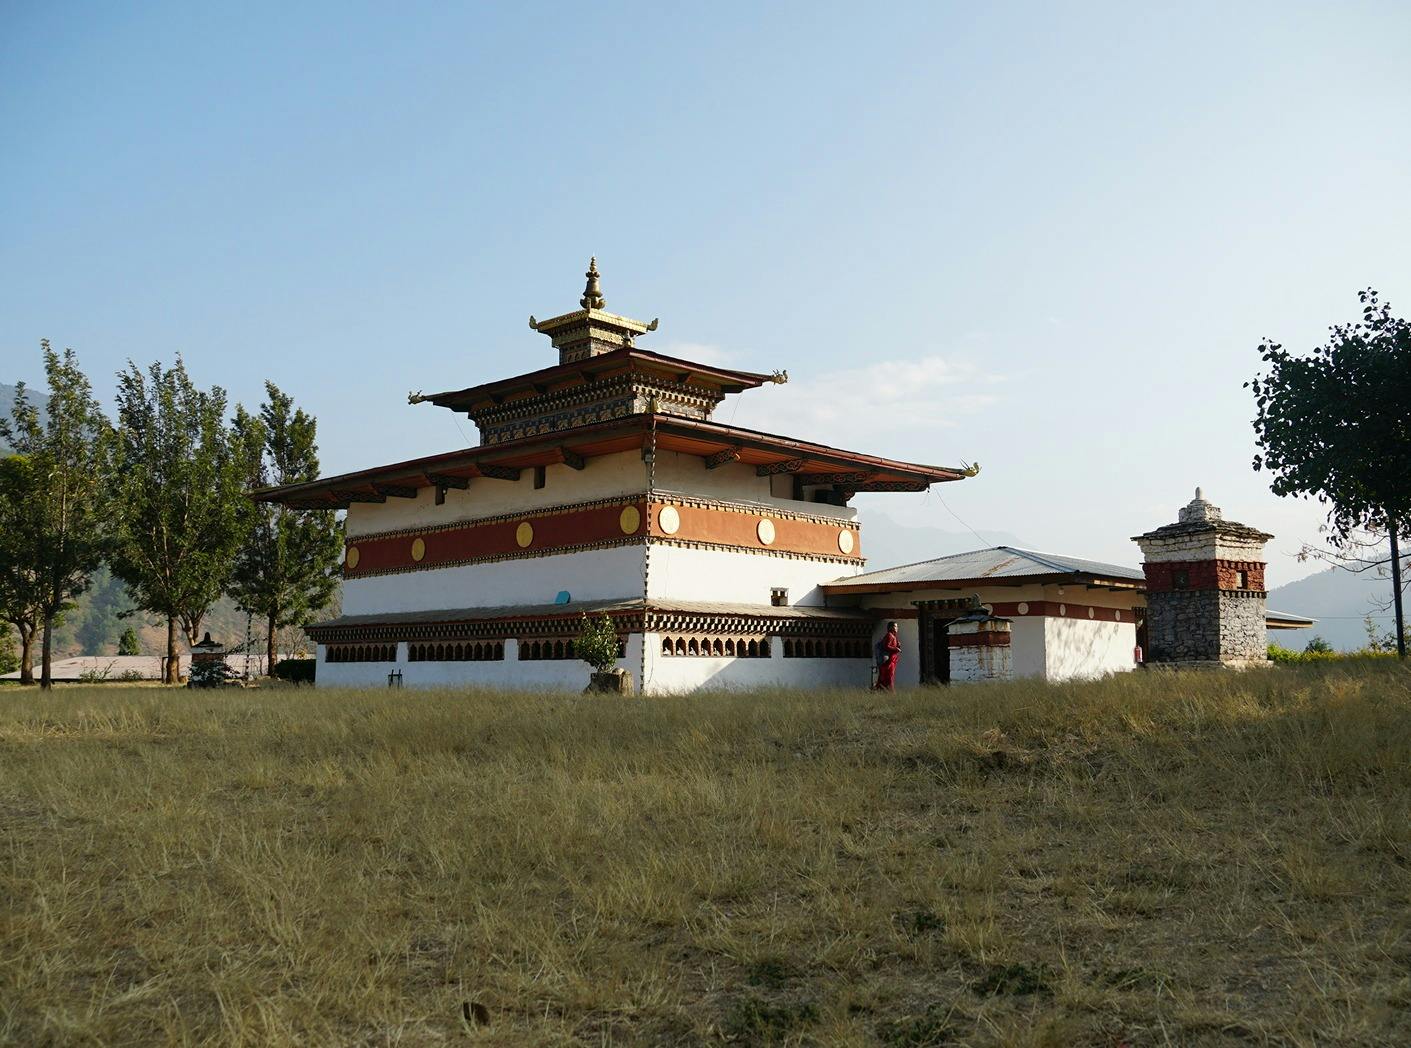 Finding Bhutan's Sacred Sites